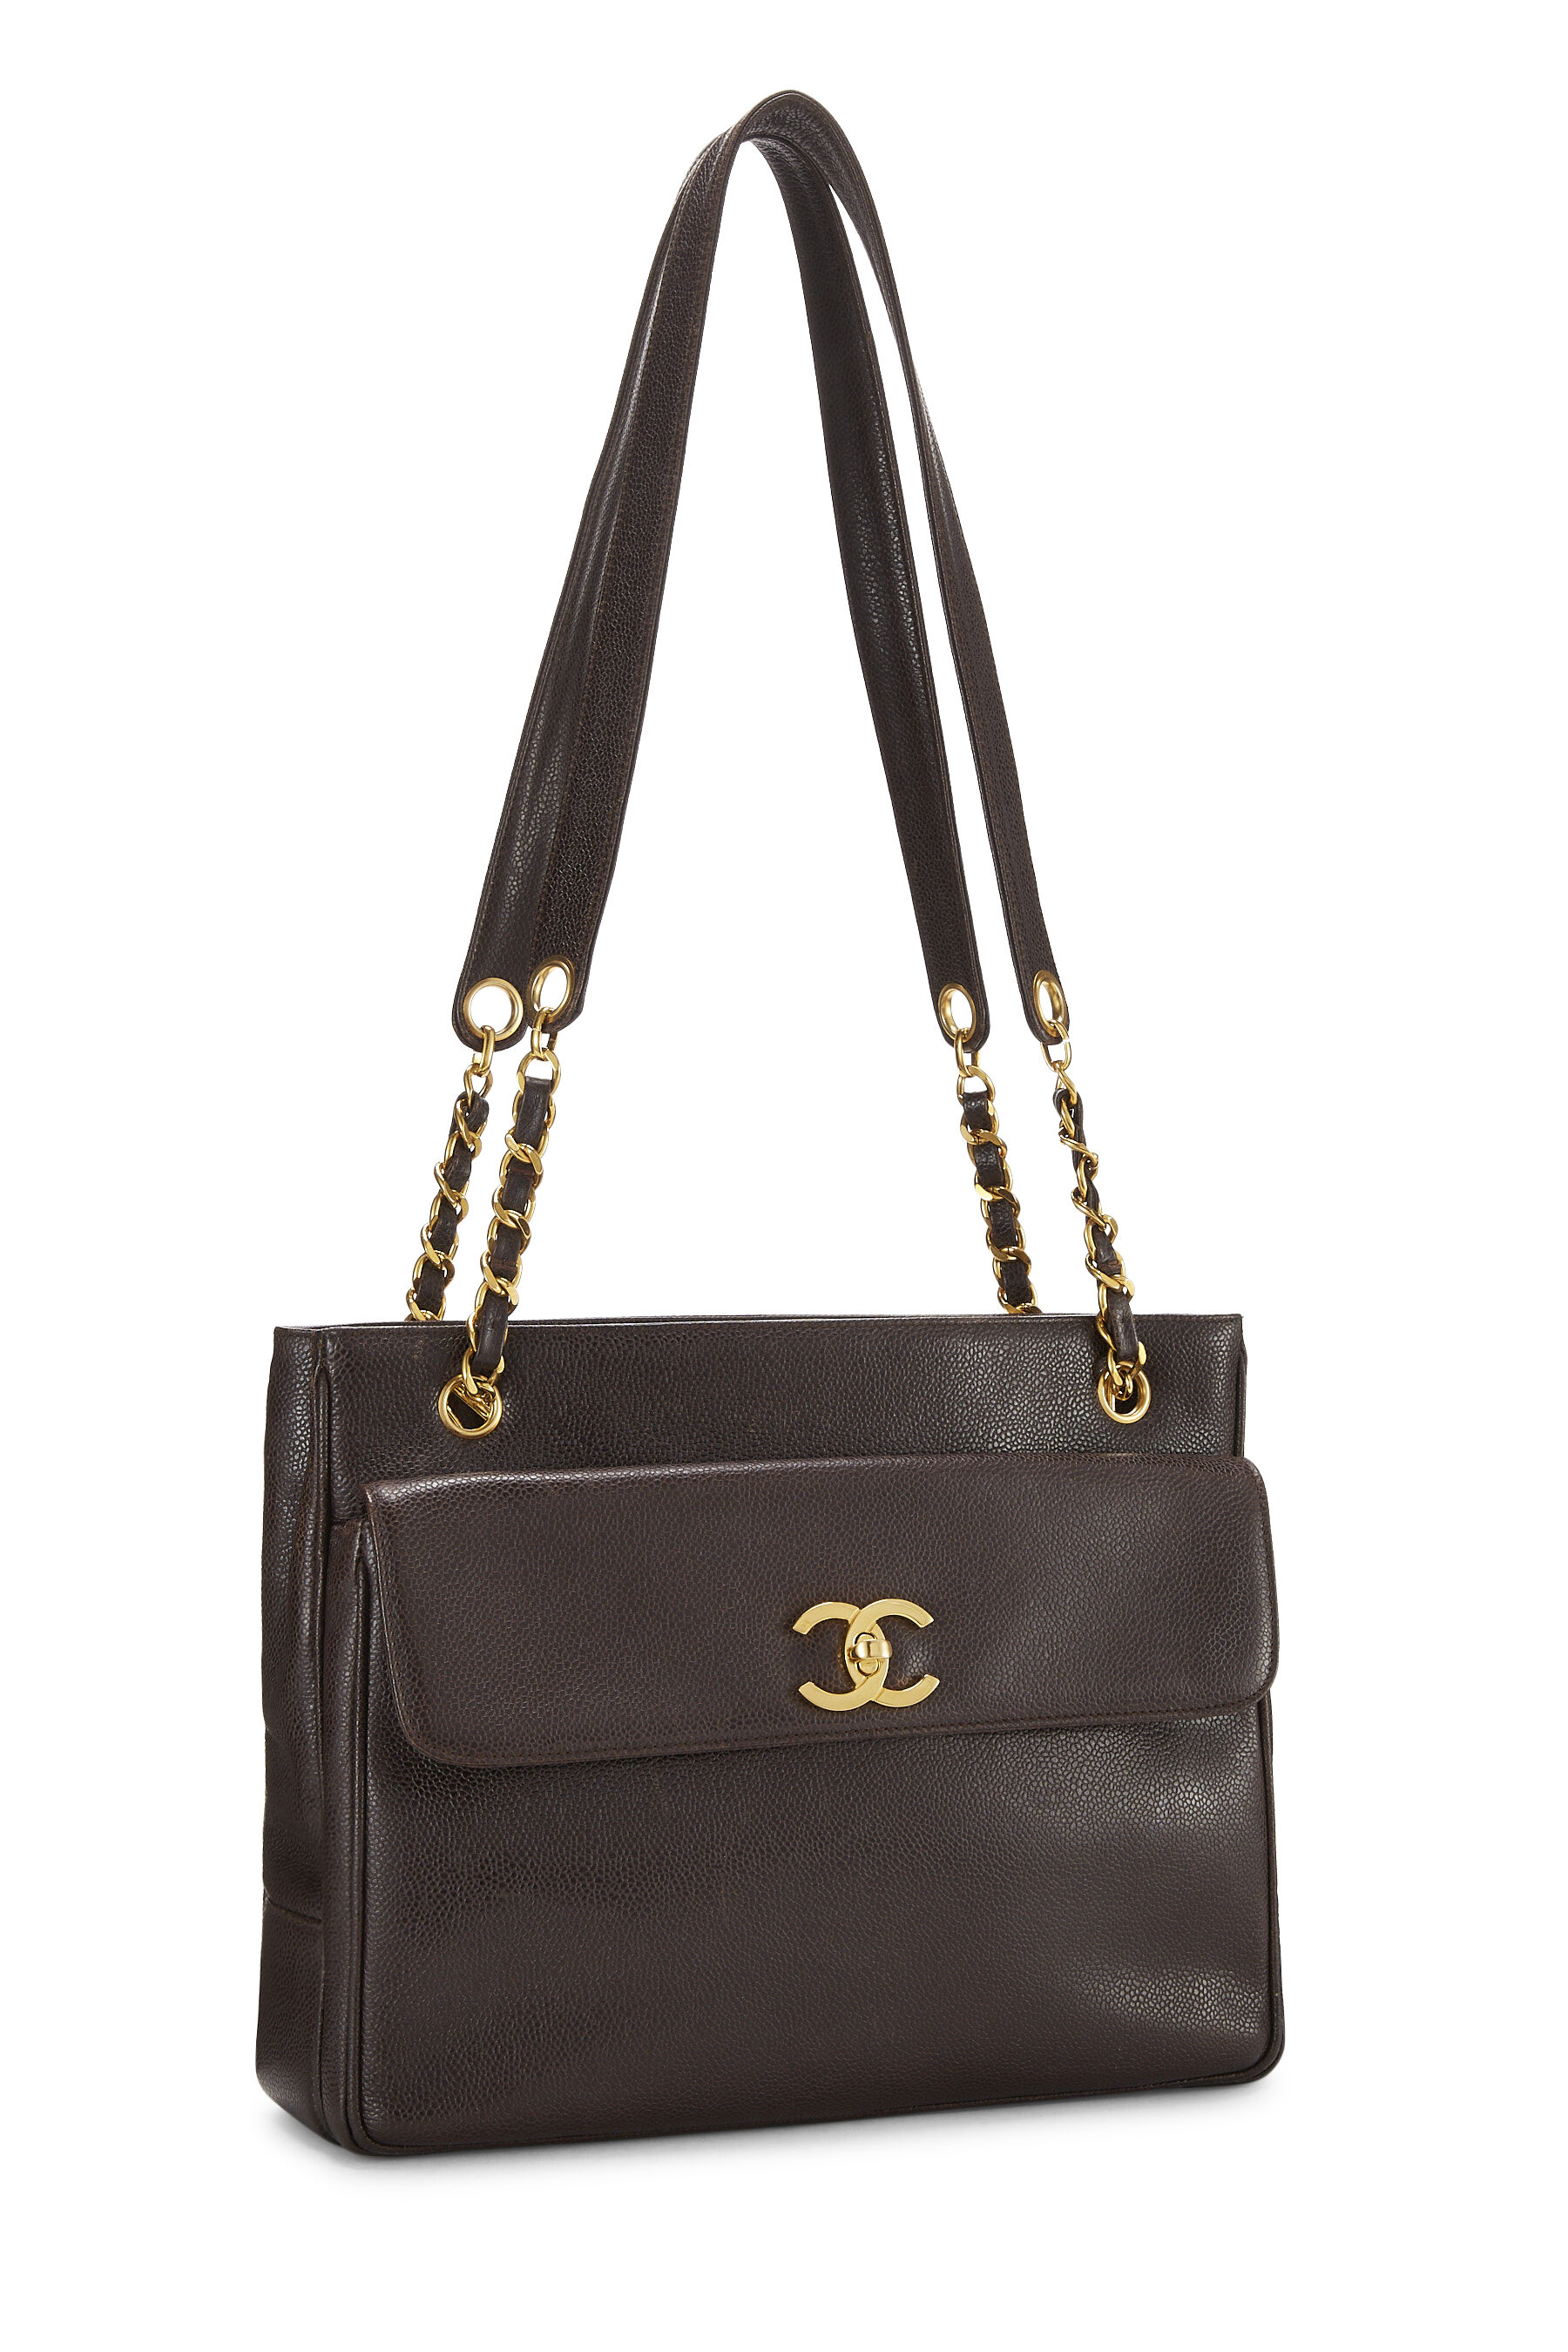 Statement leather handbag Chanel Black in Leather - 33209915